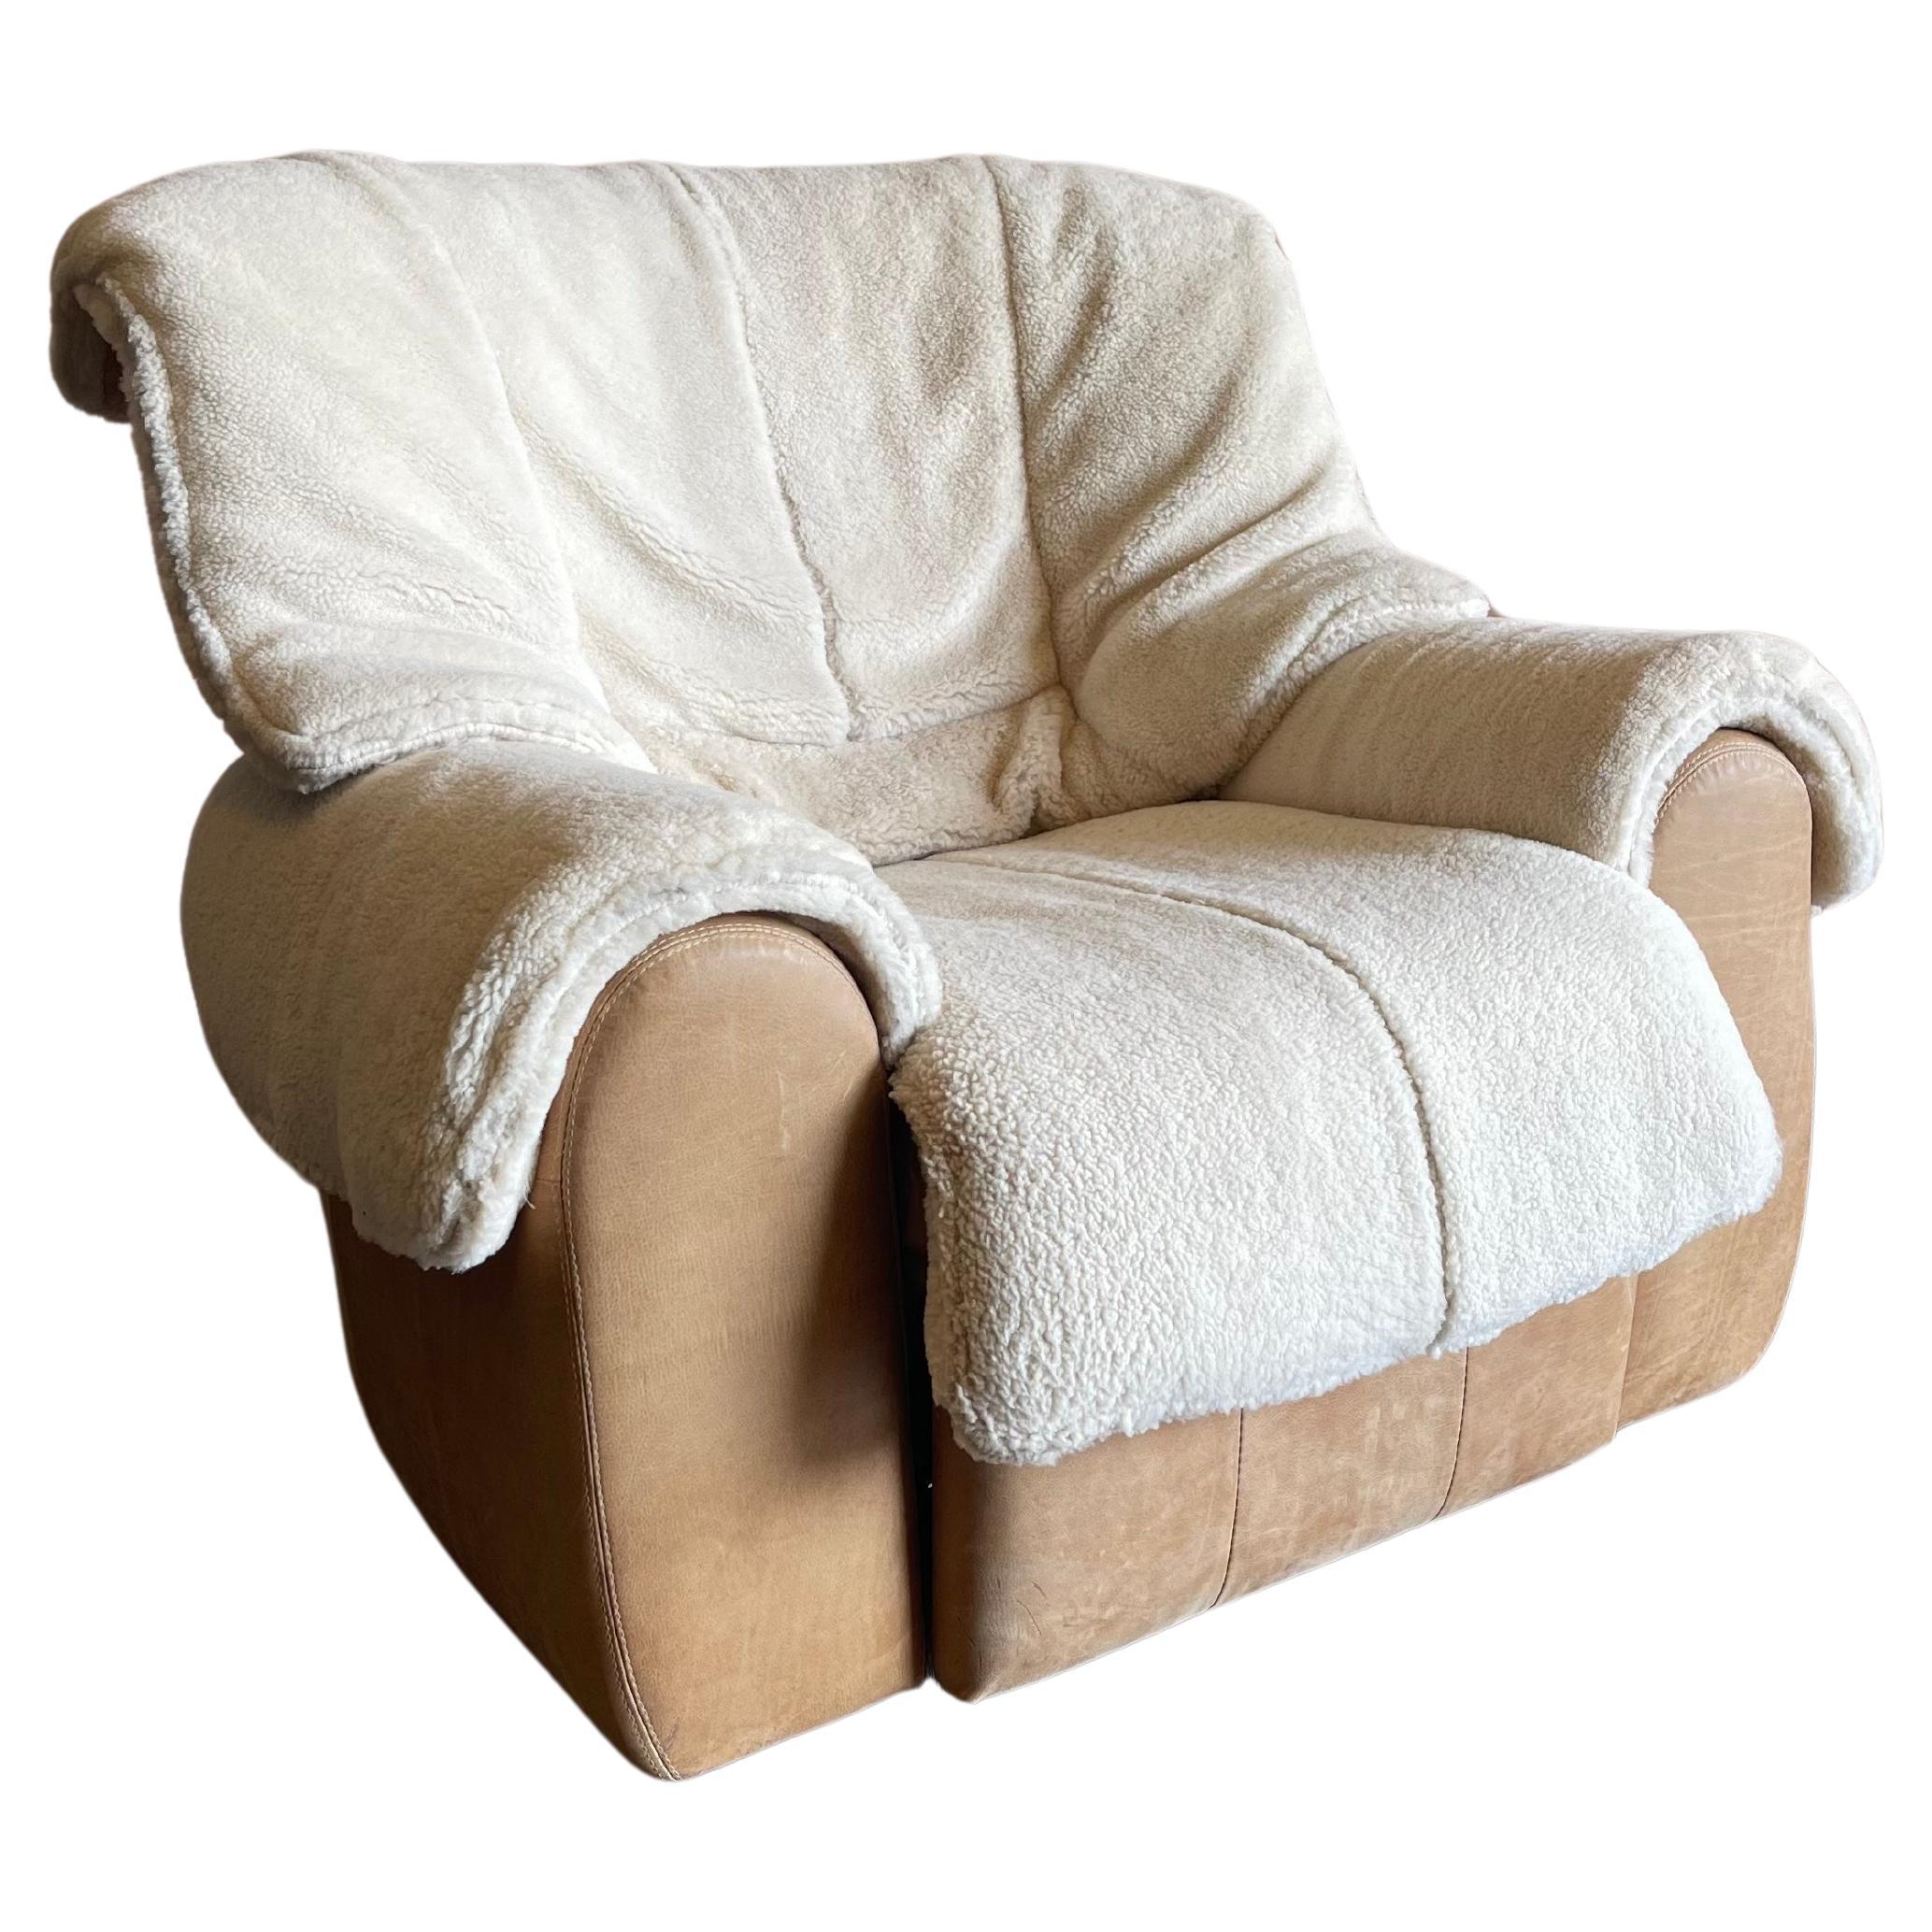 Sheepskin & Leather Alberto Rosselli for Saporiti Italia Style Lounge Chair For Sale